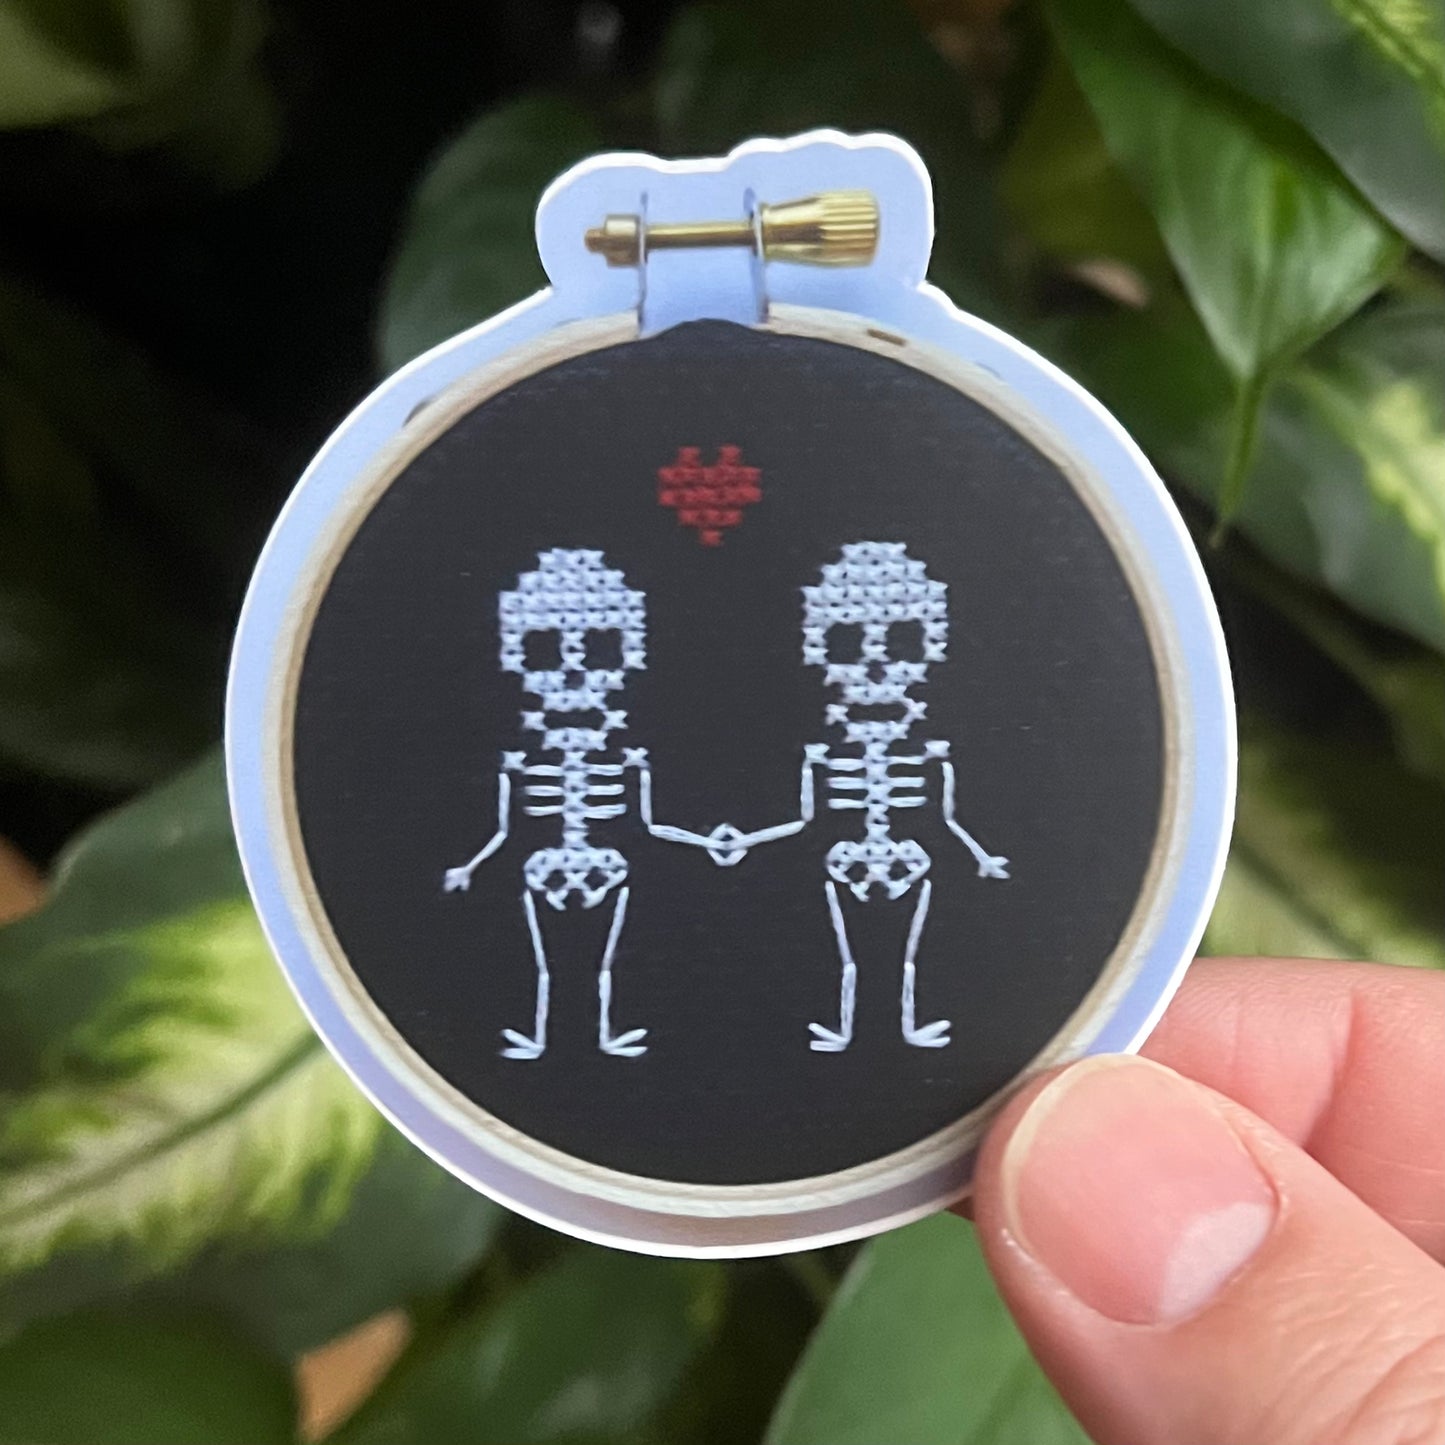 Skeletons with Heart Cross Stitch Inspired Vinyl Sticker